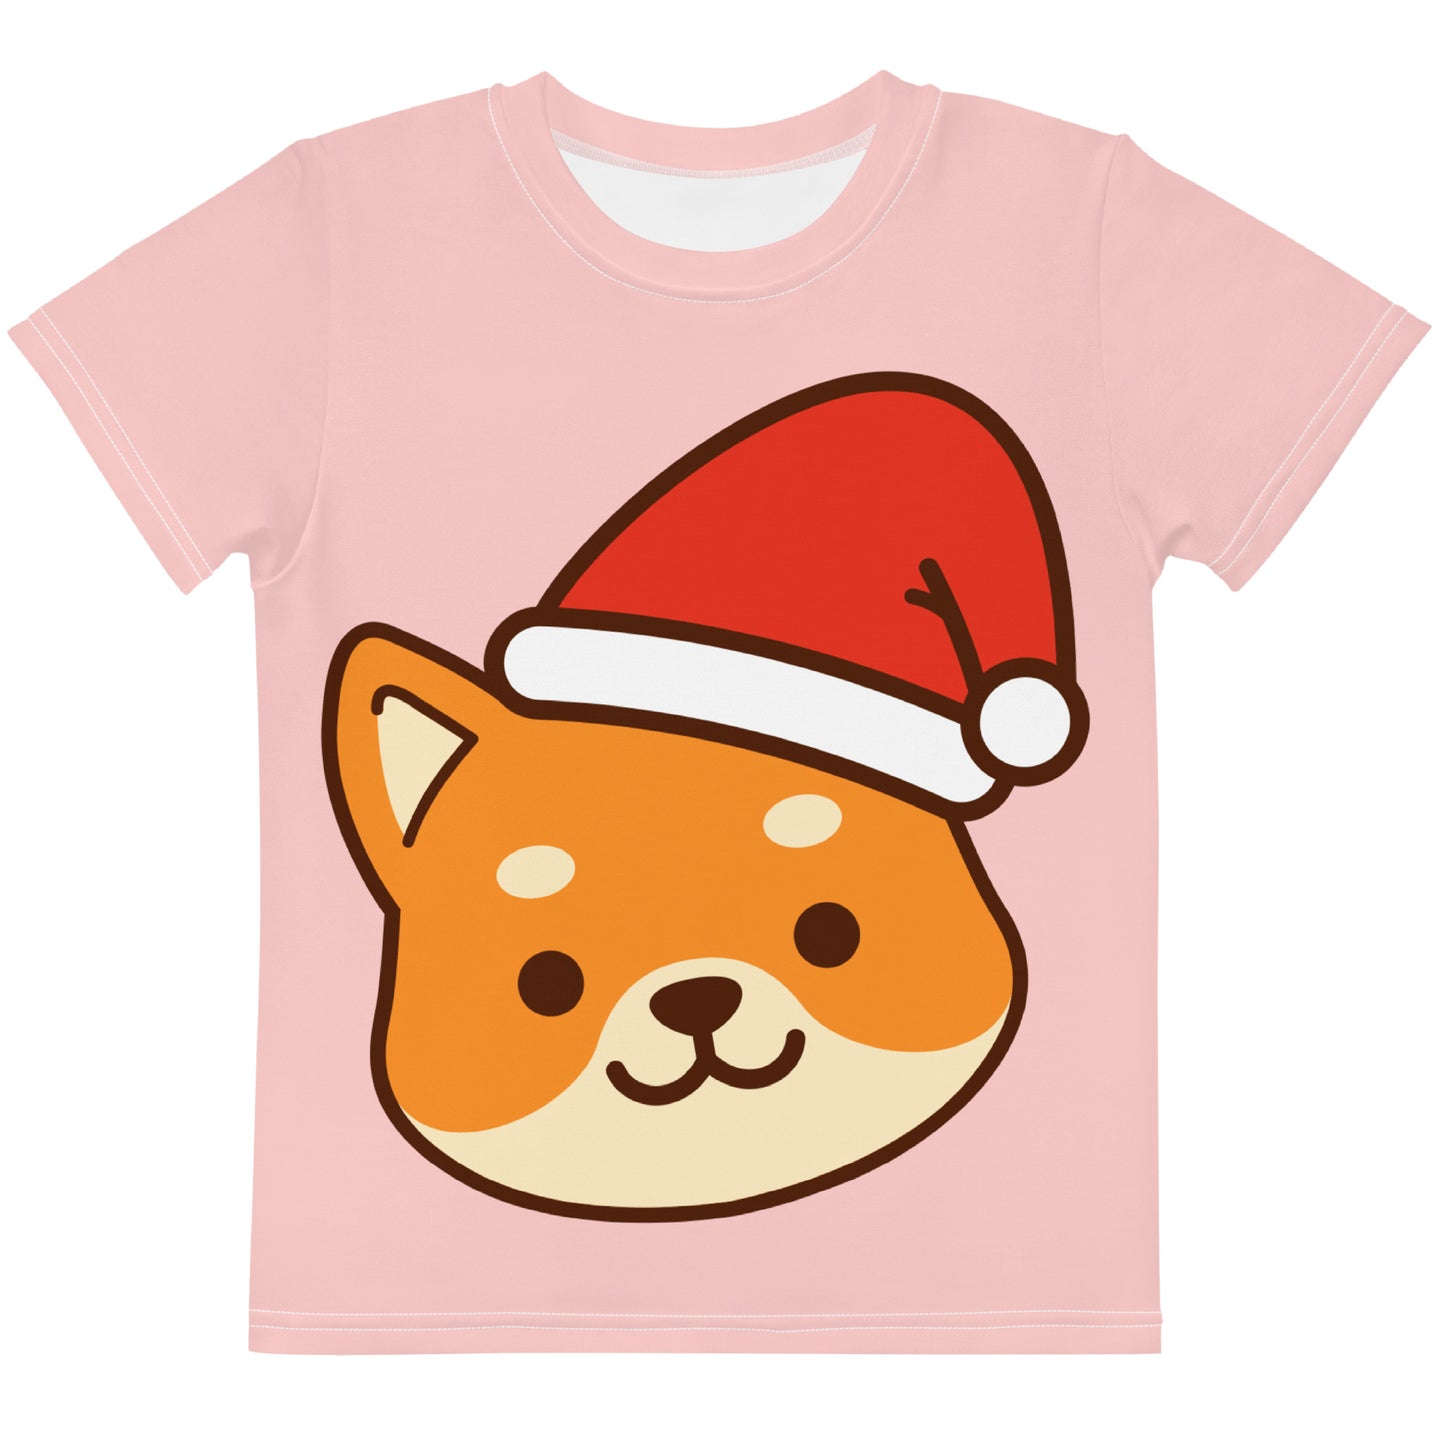 "Christmas" children's t-shirt